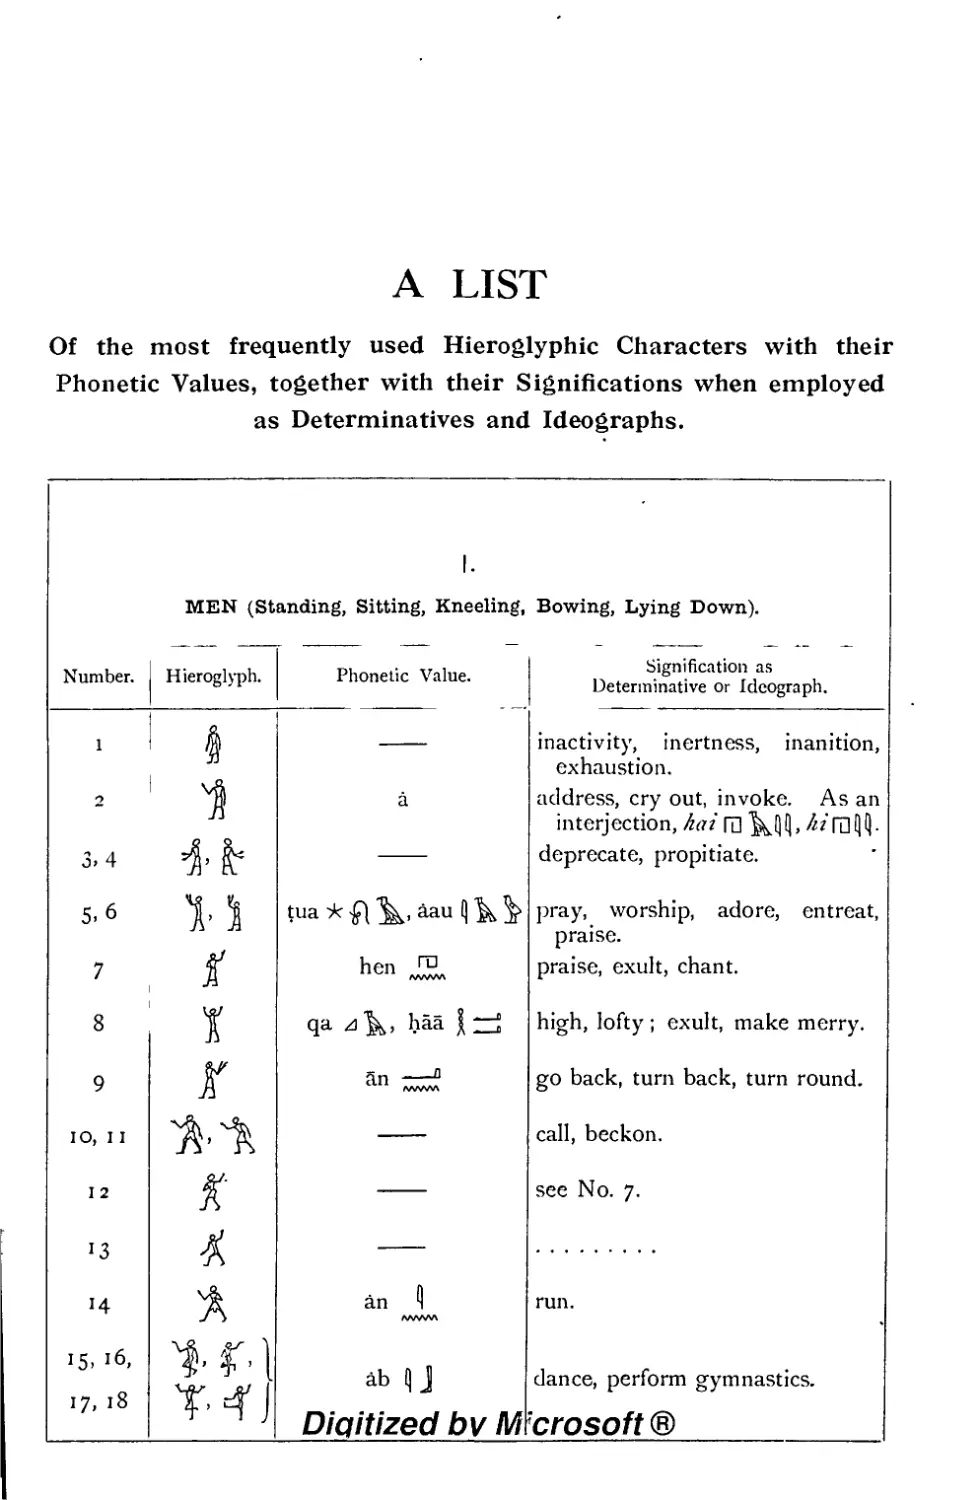 List of Hieroglyphic Characters